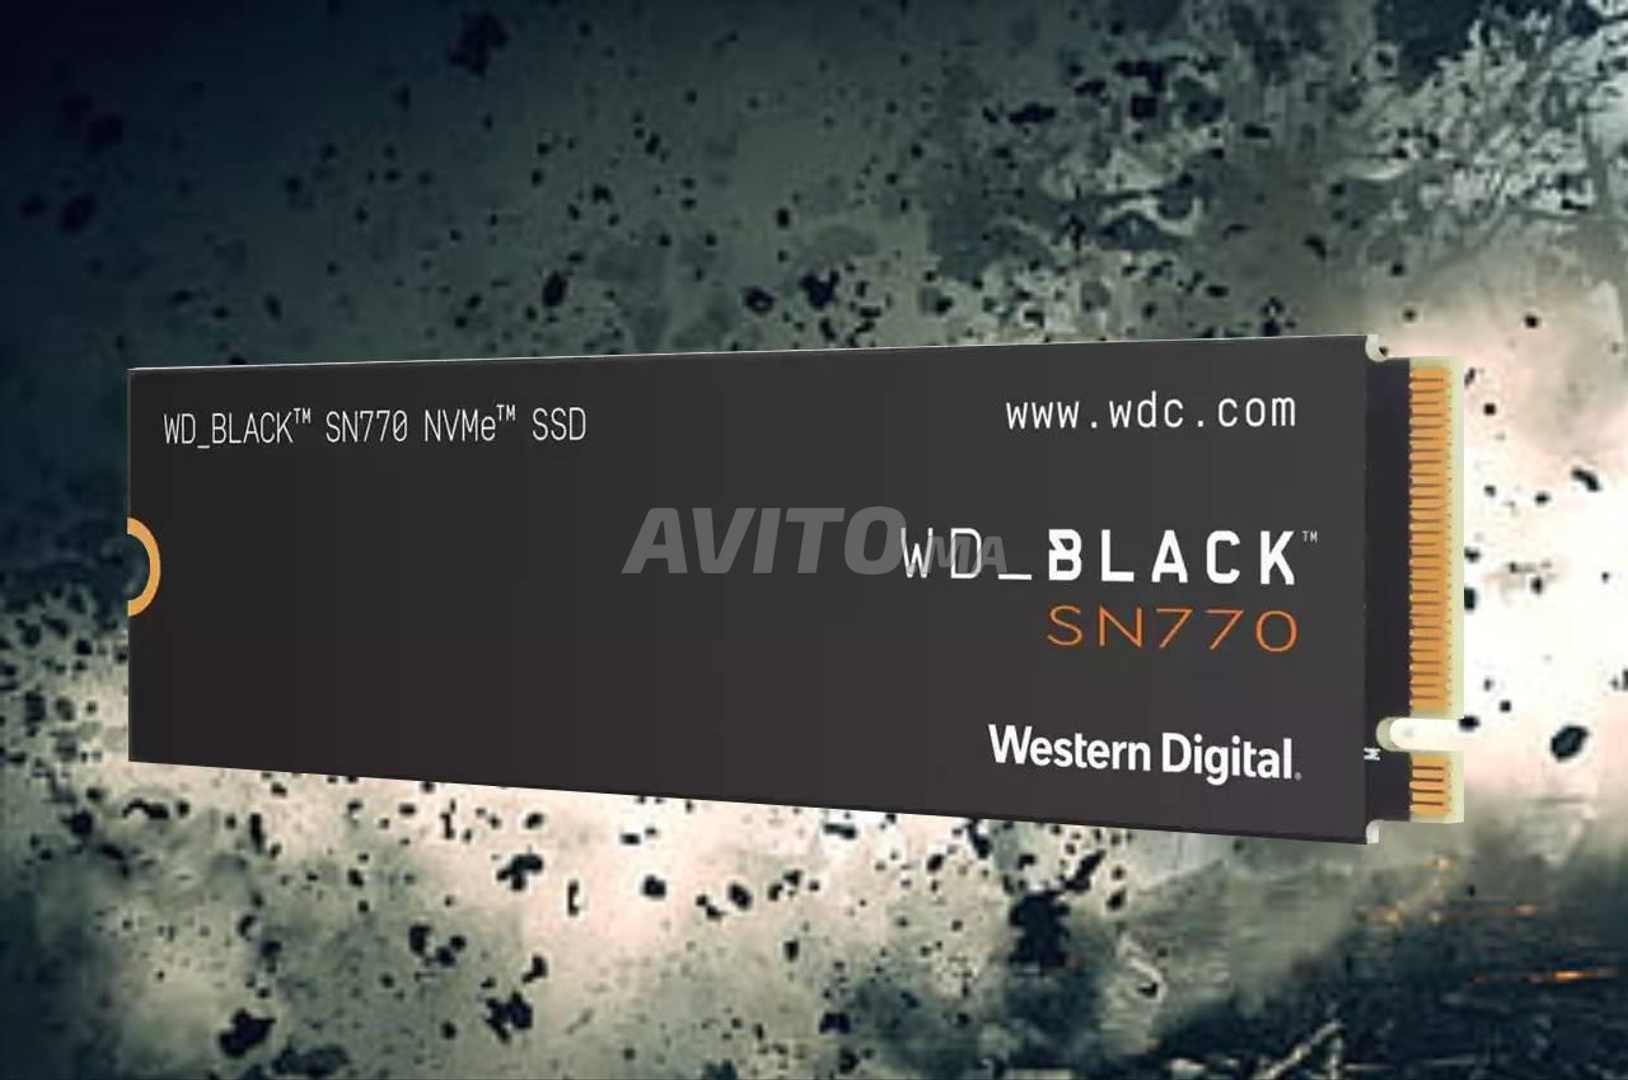 Disque dur interne SSD Western Digital BLACK SN750 SE M.2 2280 NVMe PCIe  250 Go (WDS250G1B0E) prix Maroc